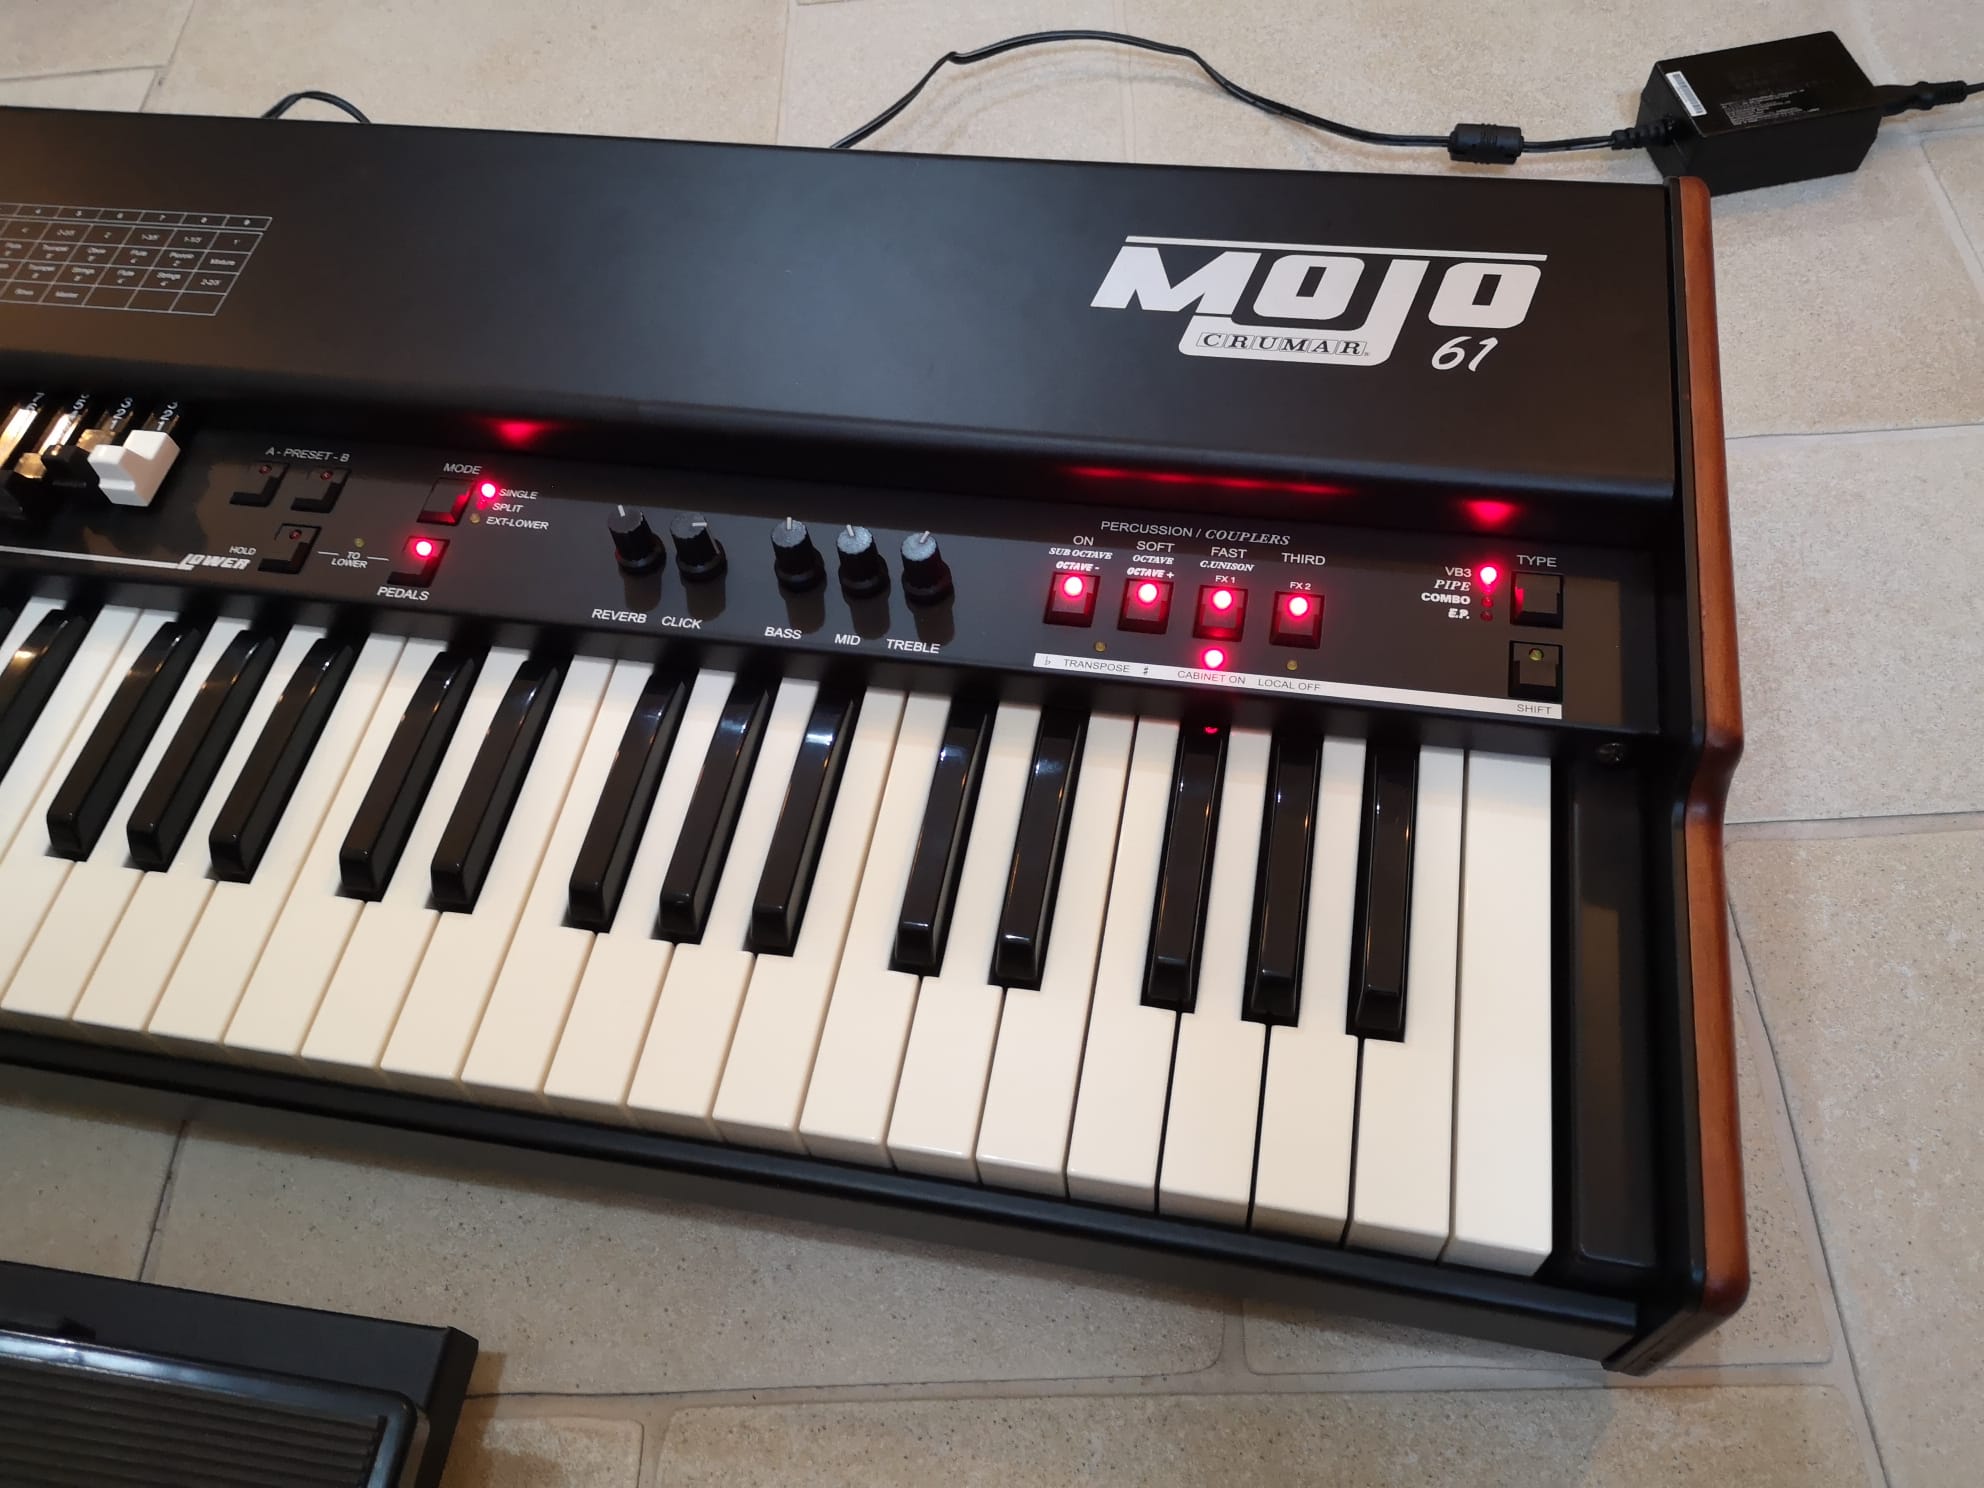 CRUMAR MOJO 61-Key Organ with BAG and VOLUME PEDAL - B STOCK !!!!